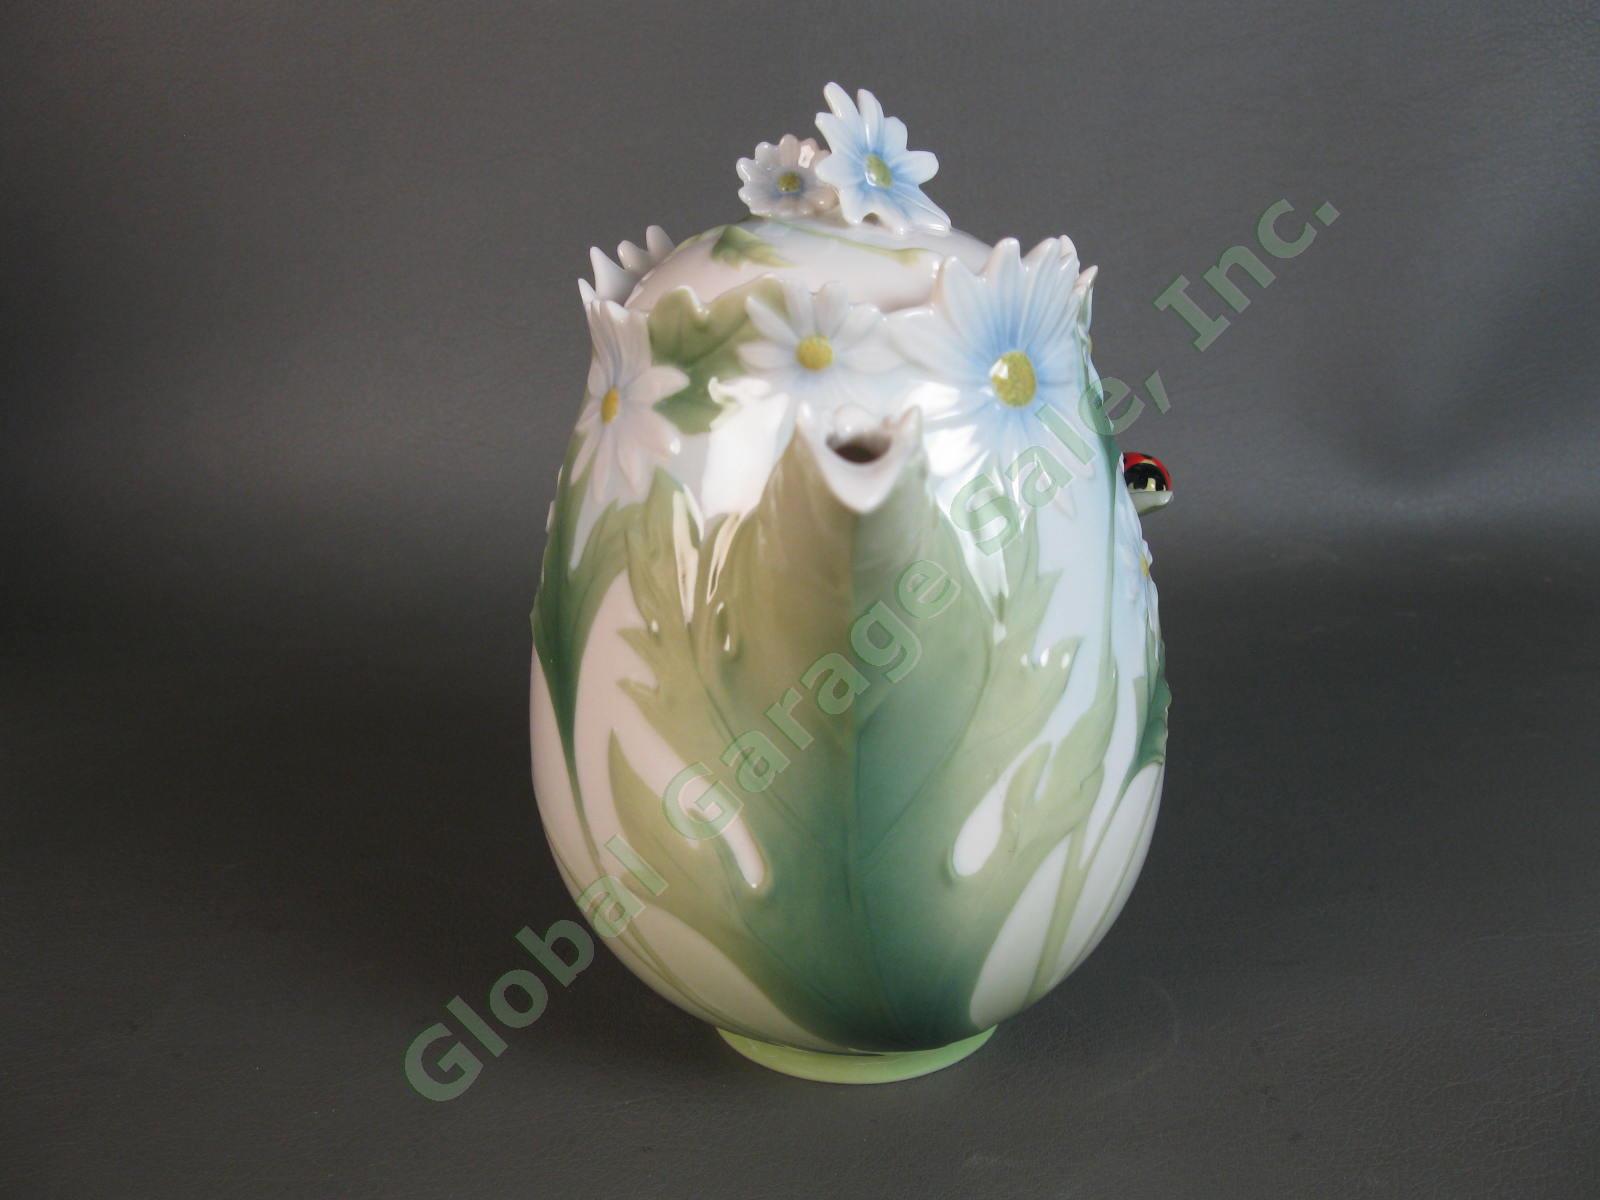 Franz Porcelain Ladybug Design Collection Teapot Cover Coffee Tea Pot FZ00300 NR 5